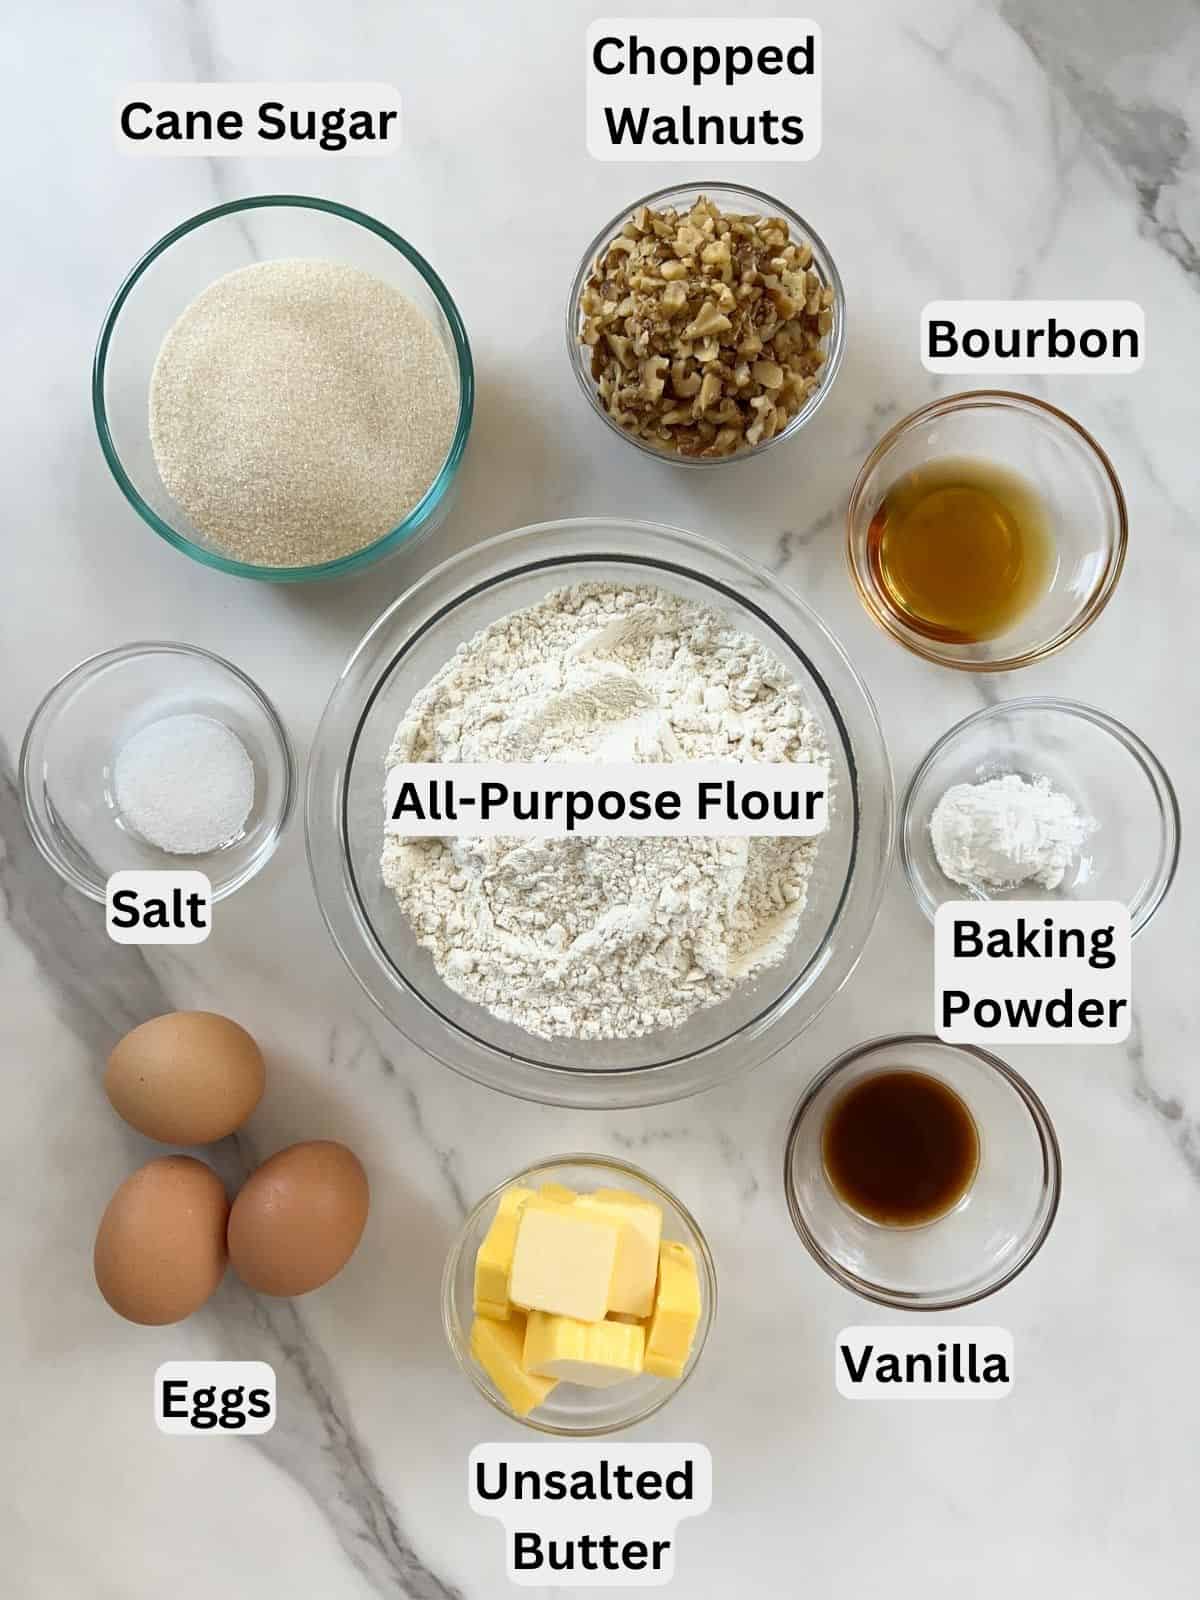 Sugar, walnuts, bourbon, baking powder, vanilla, butter, eggs, salt, and flour measured in glass bowls.